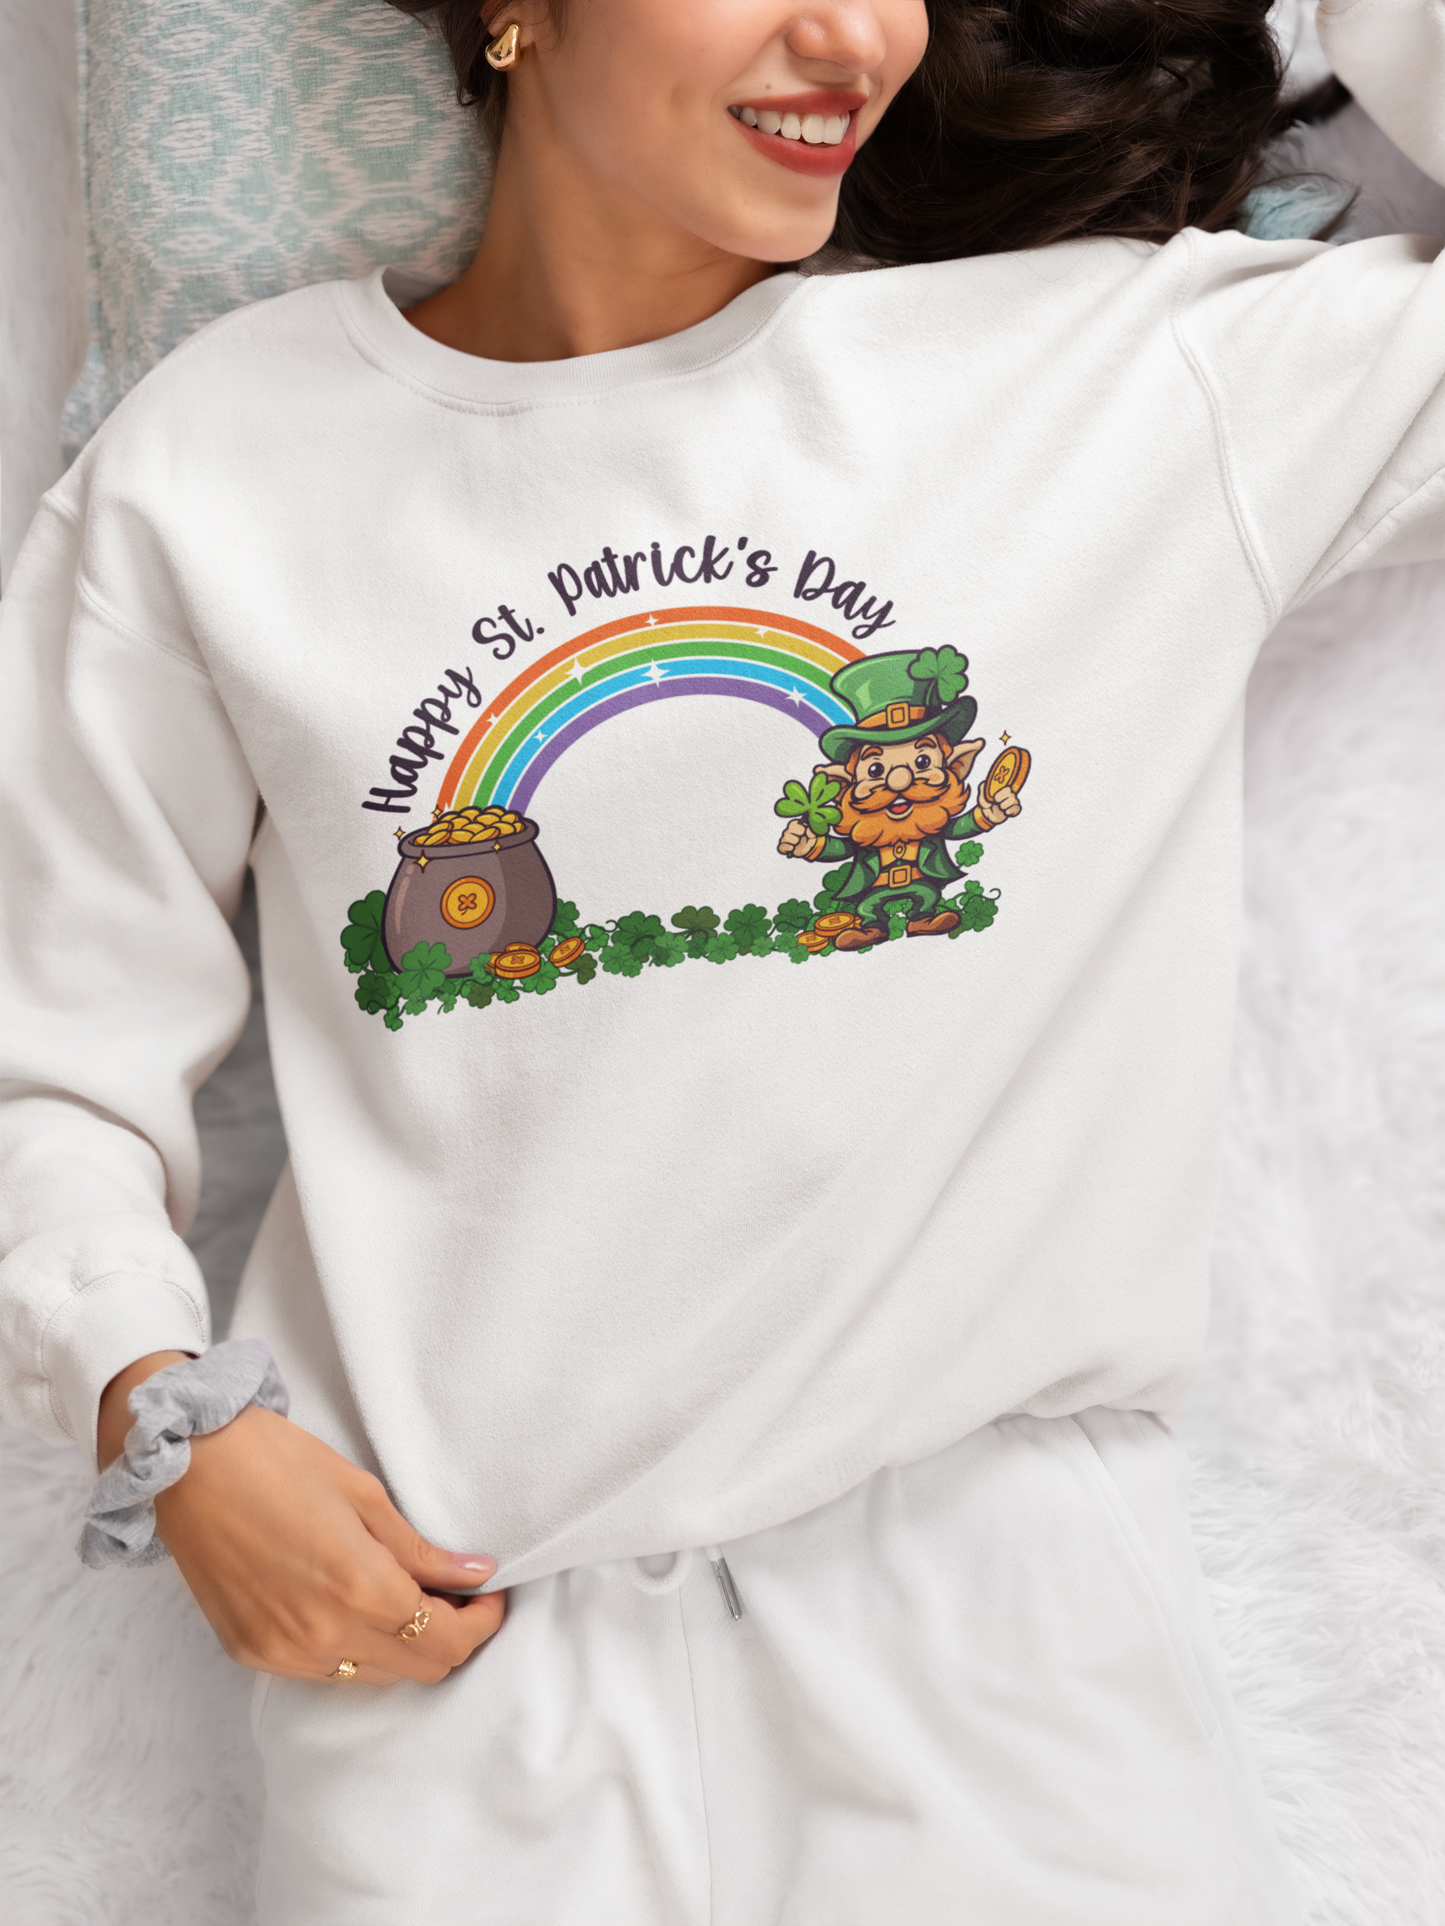 Retro Boho Rainbow Shirt, Leprachaun And Gold Shirt, St Patrick's Day Retro Shirt, Retro Rainbow Shirt, Cute Leprachaun Holds Gold Shirt, Leprechaun For Kids Shirt, Irish Shamrock Leprechaun Shirt